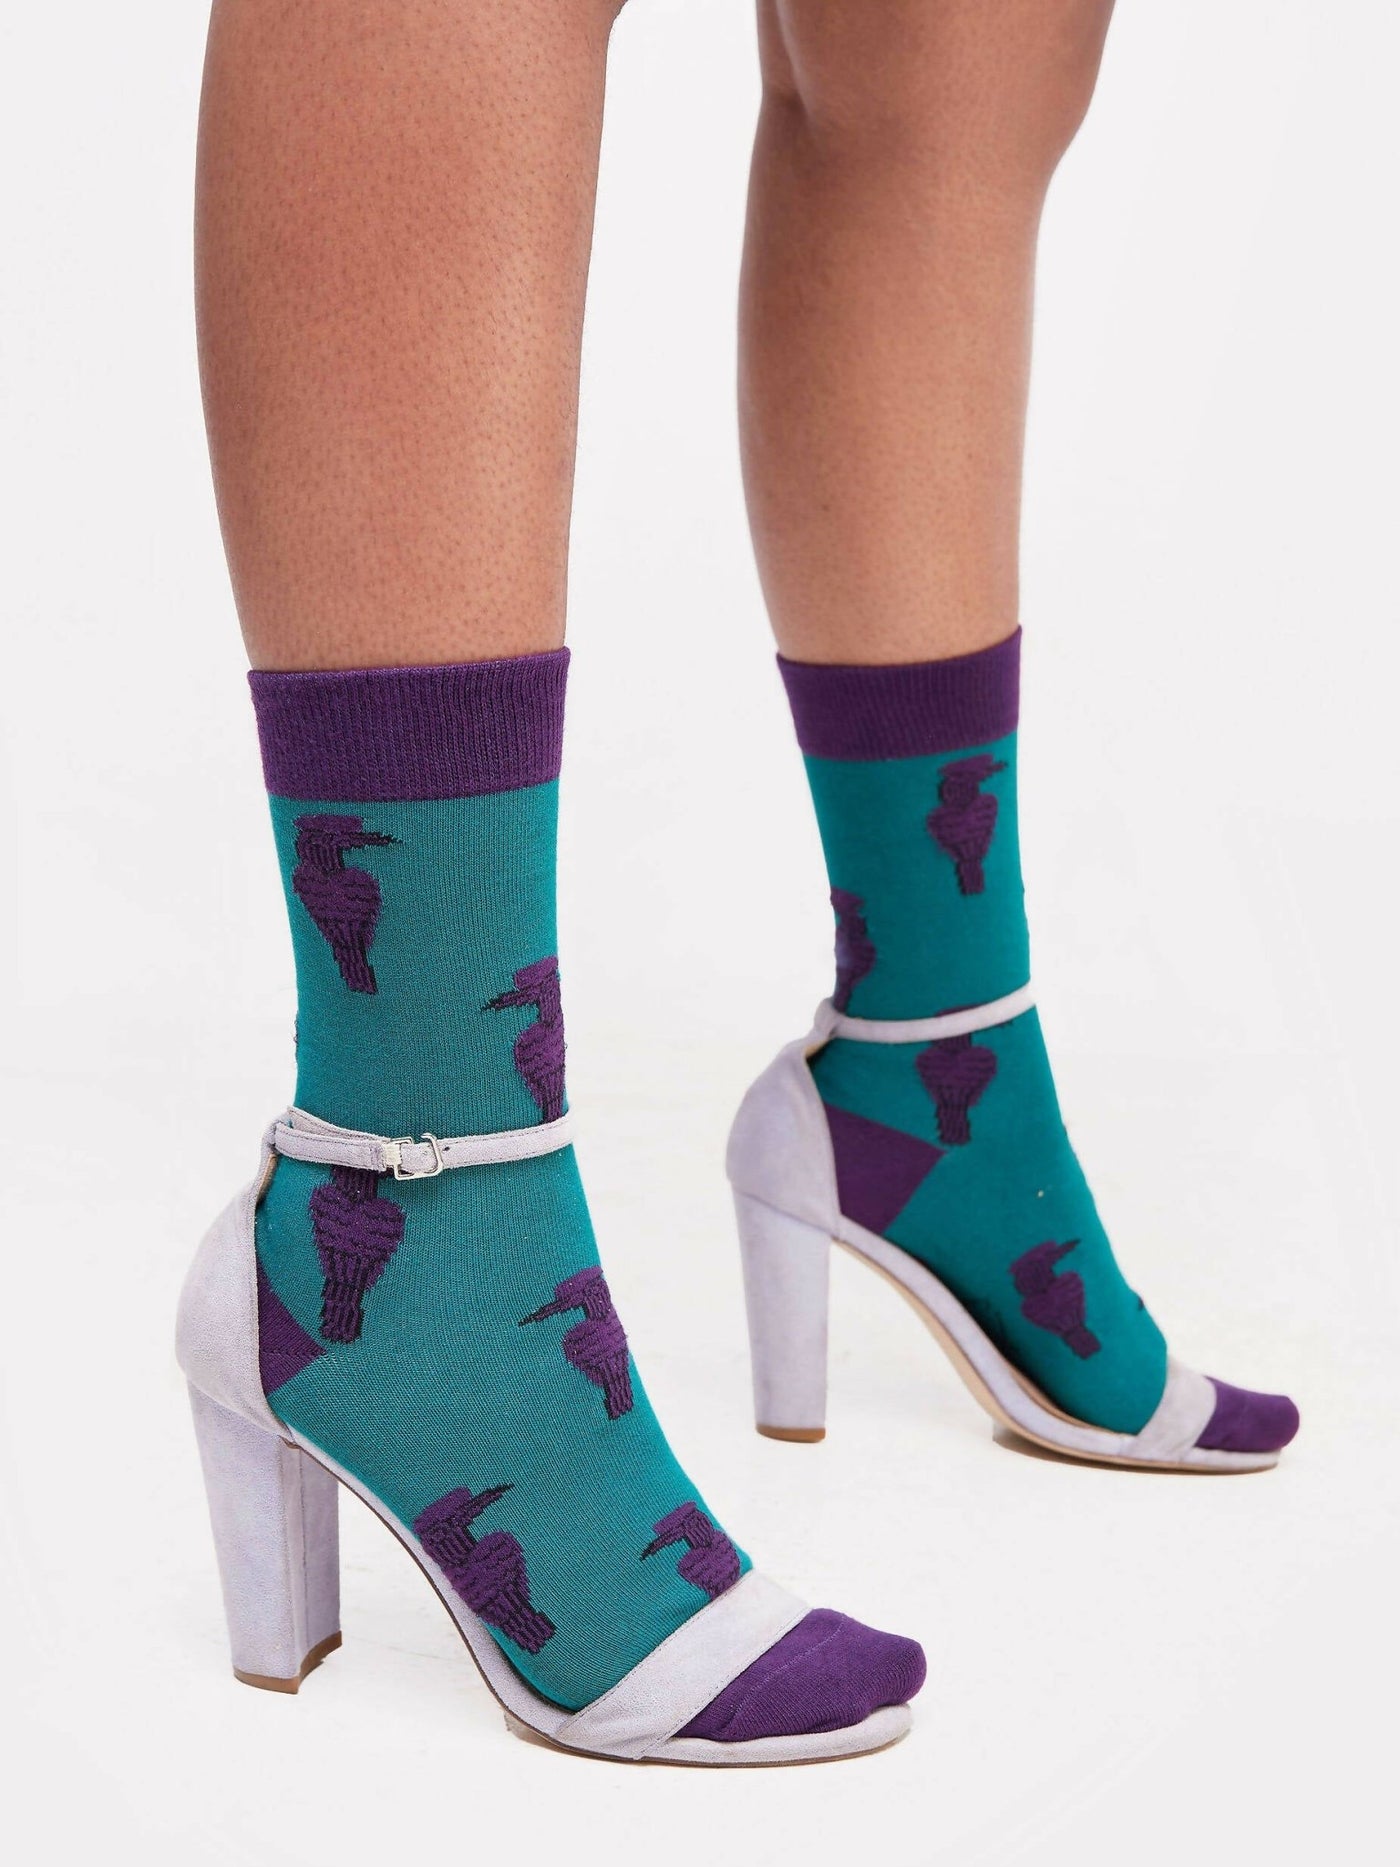 Kamata Purple Hornbill Combed Cotton Socks - Purple / Green - Shopzetu